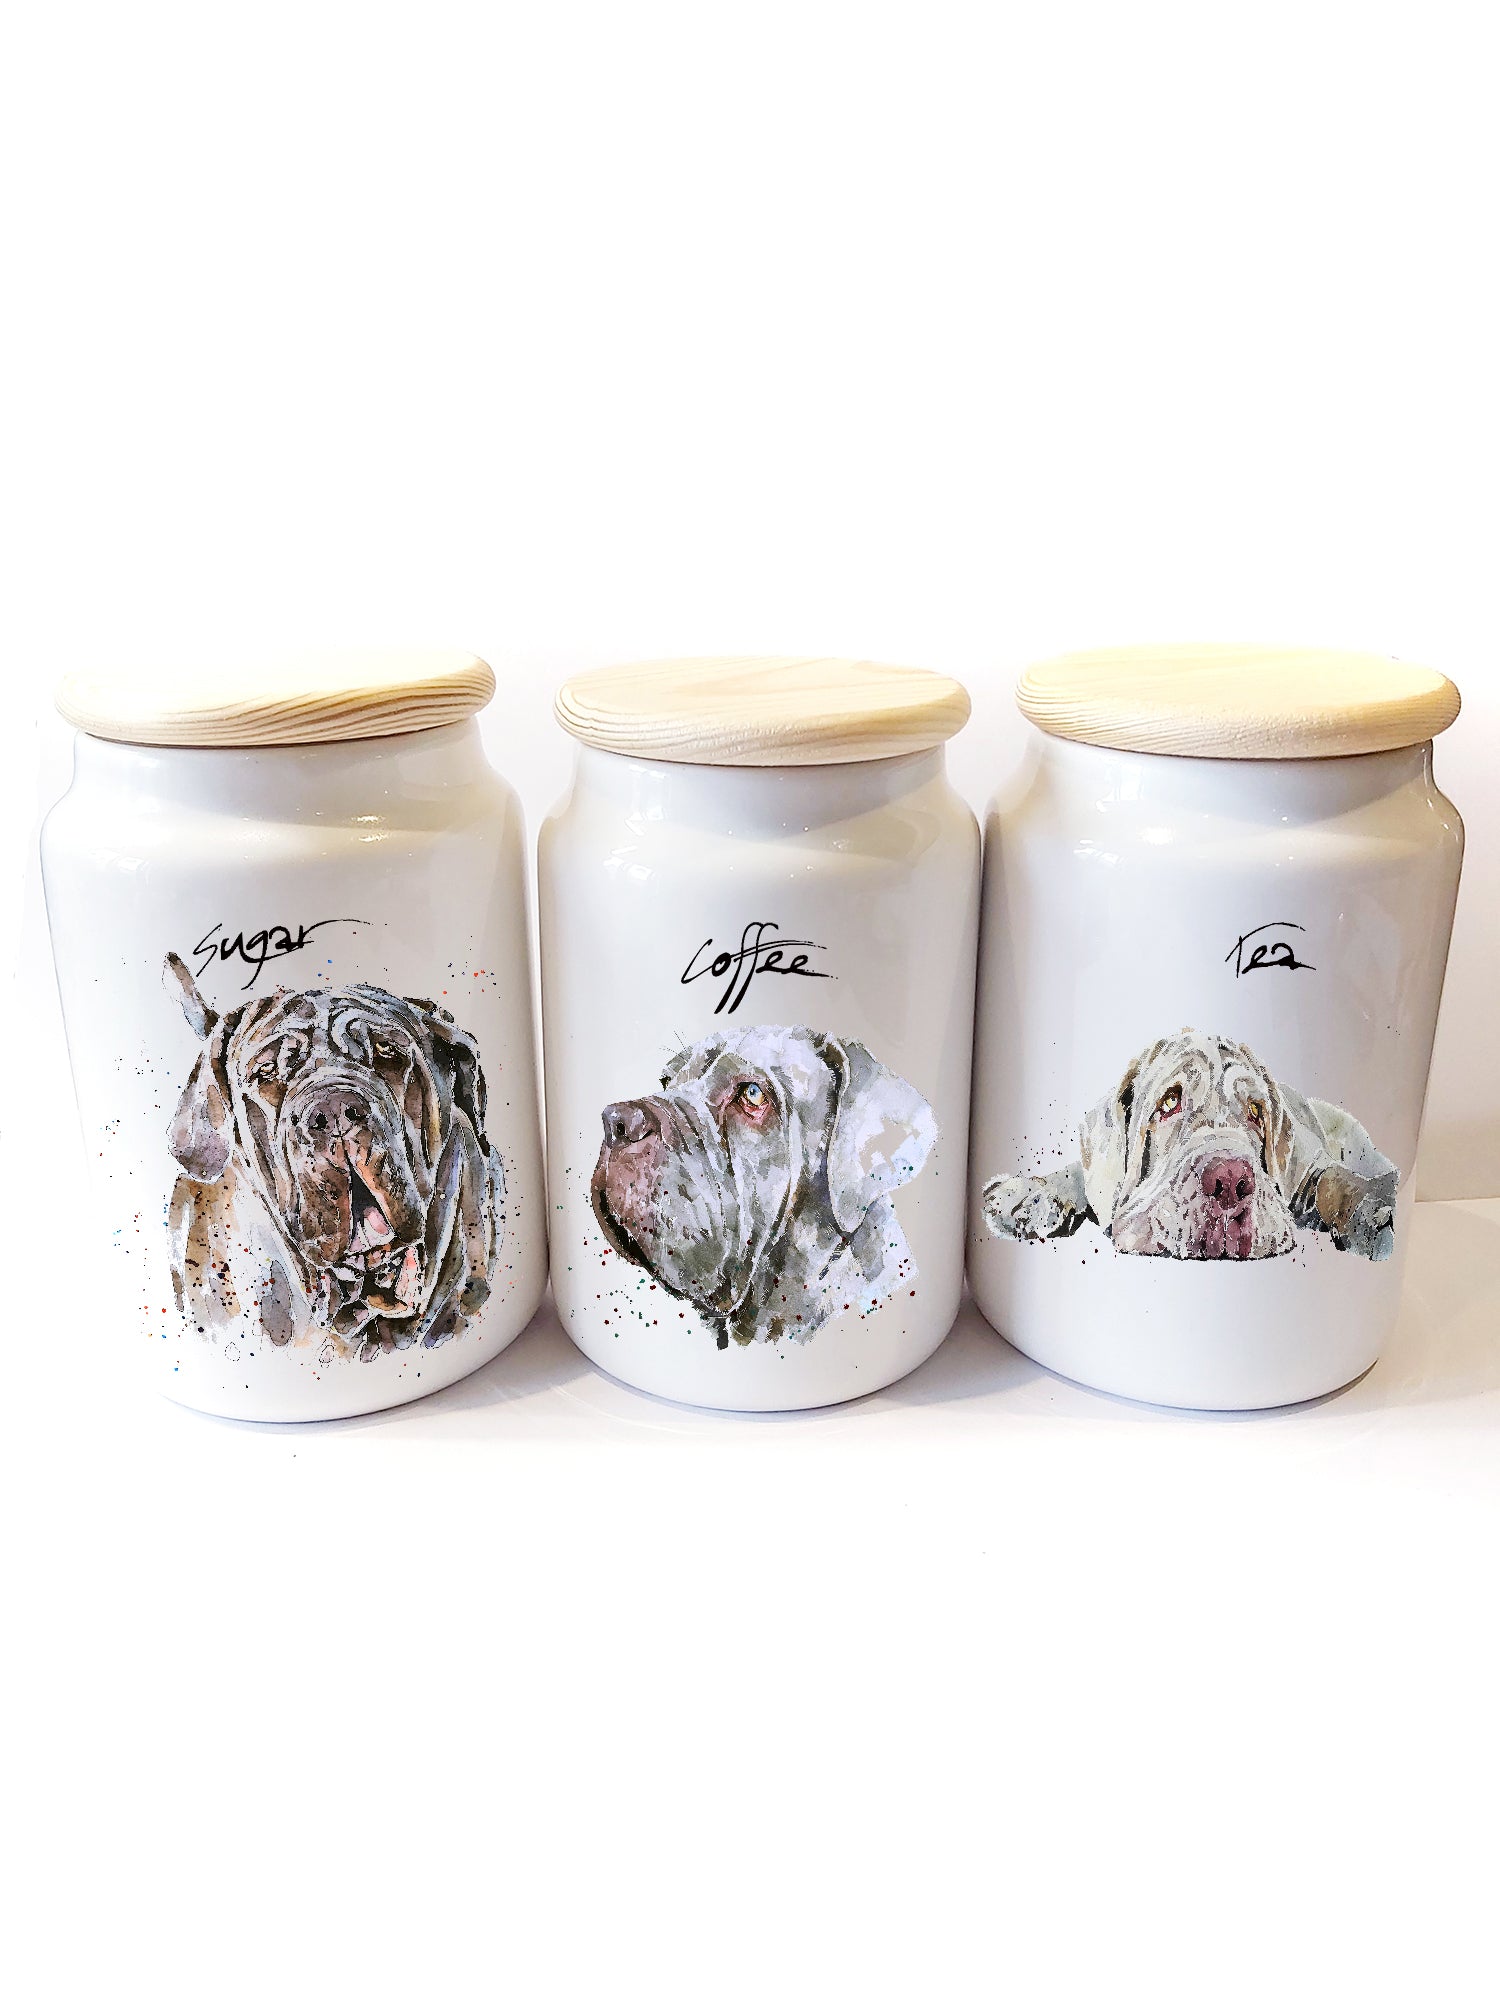 "Neapolitan Mastiff" - Airtight Storage Jars